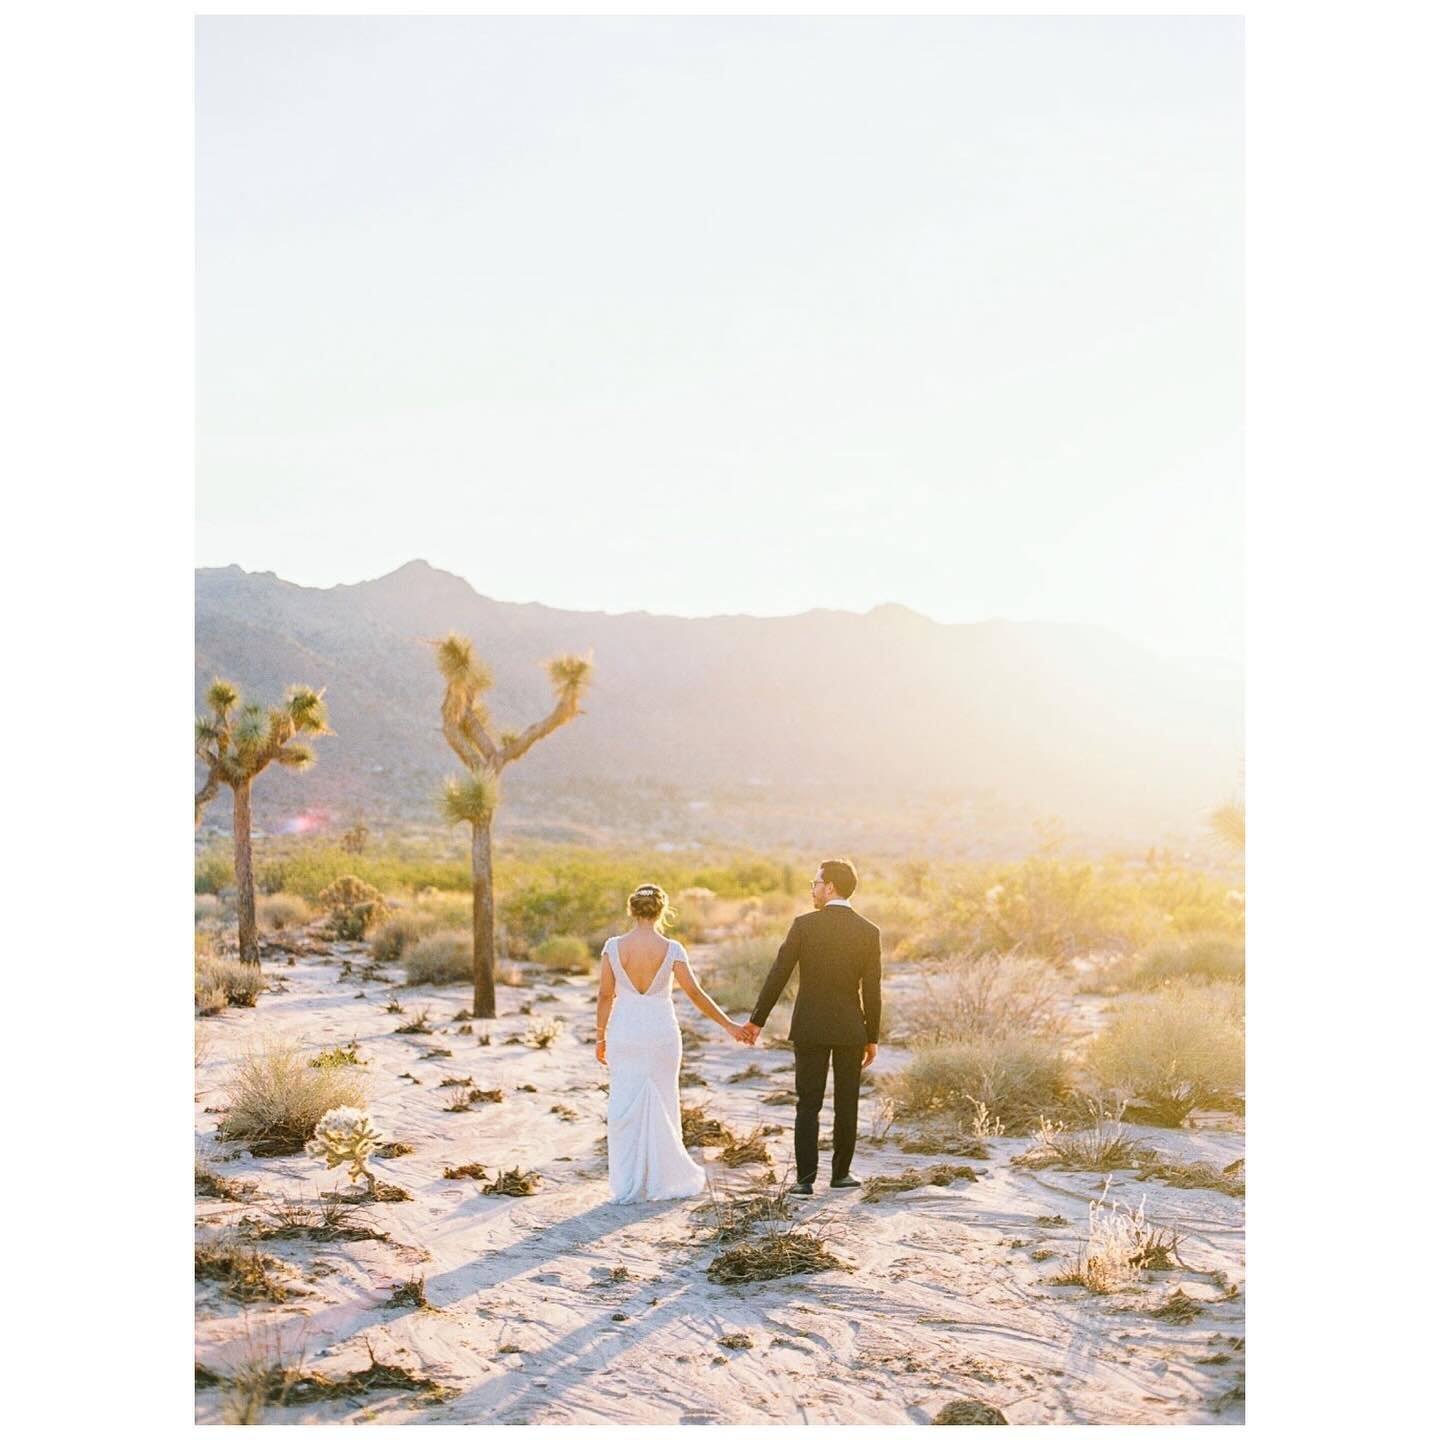 Manifesting another desert wedding 🌵